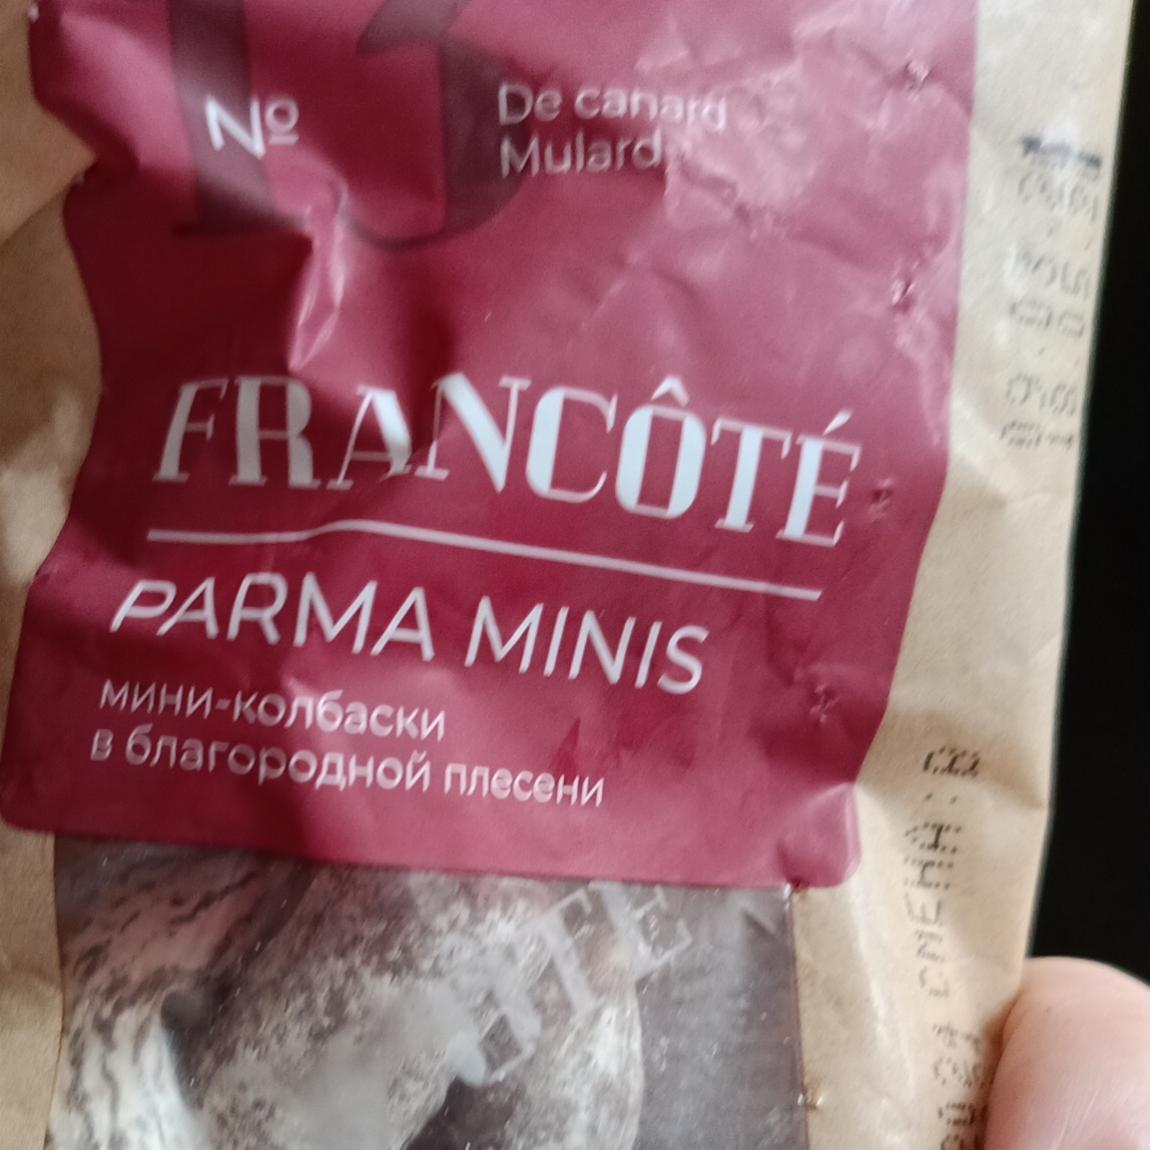 Фото - Мини-колбаски в благородной плесени Parma minis Francote